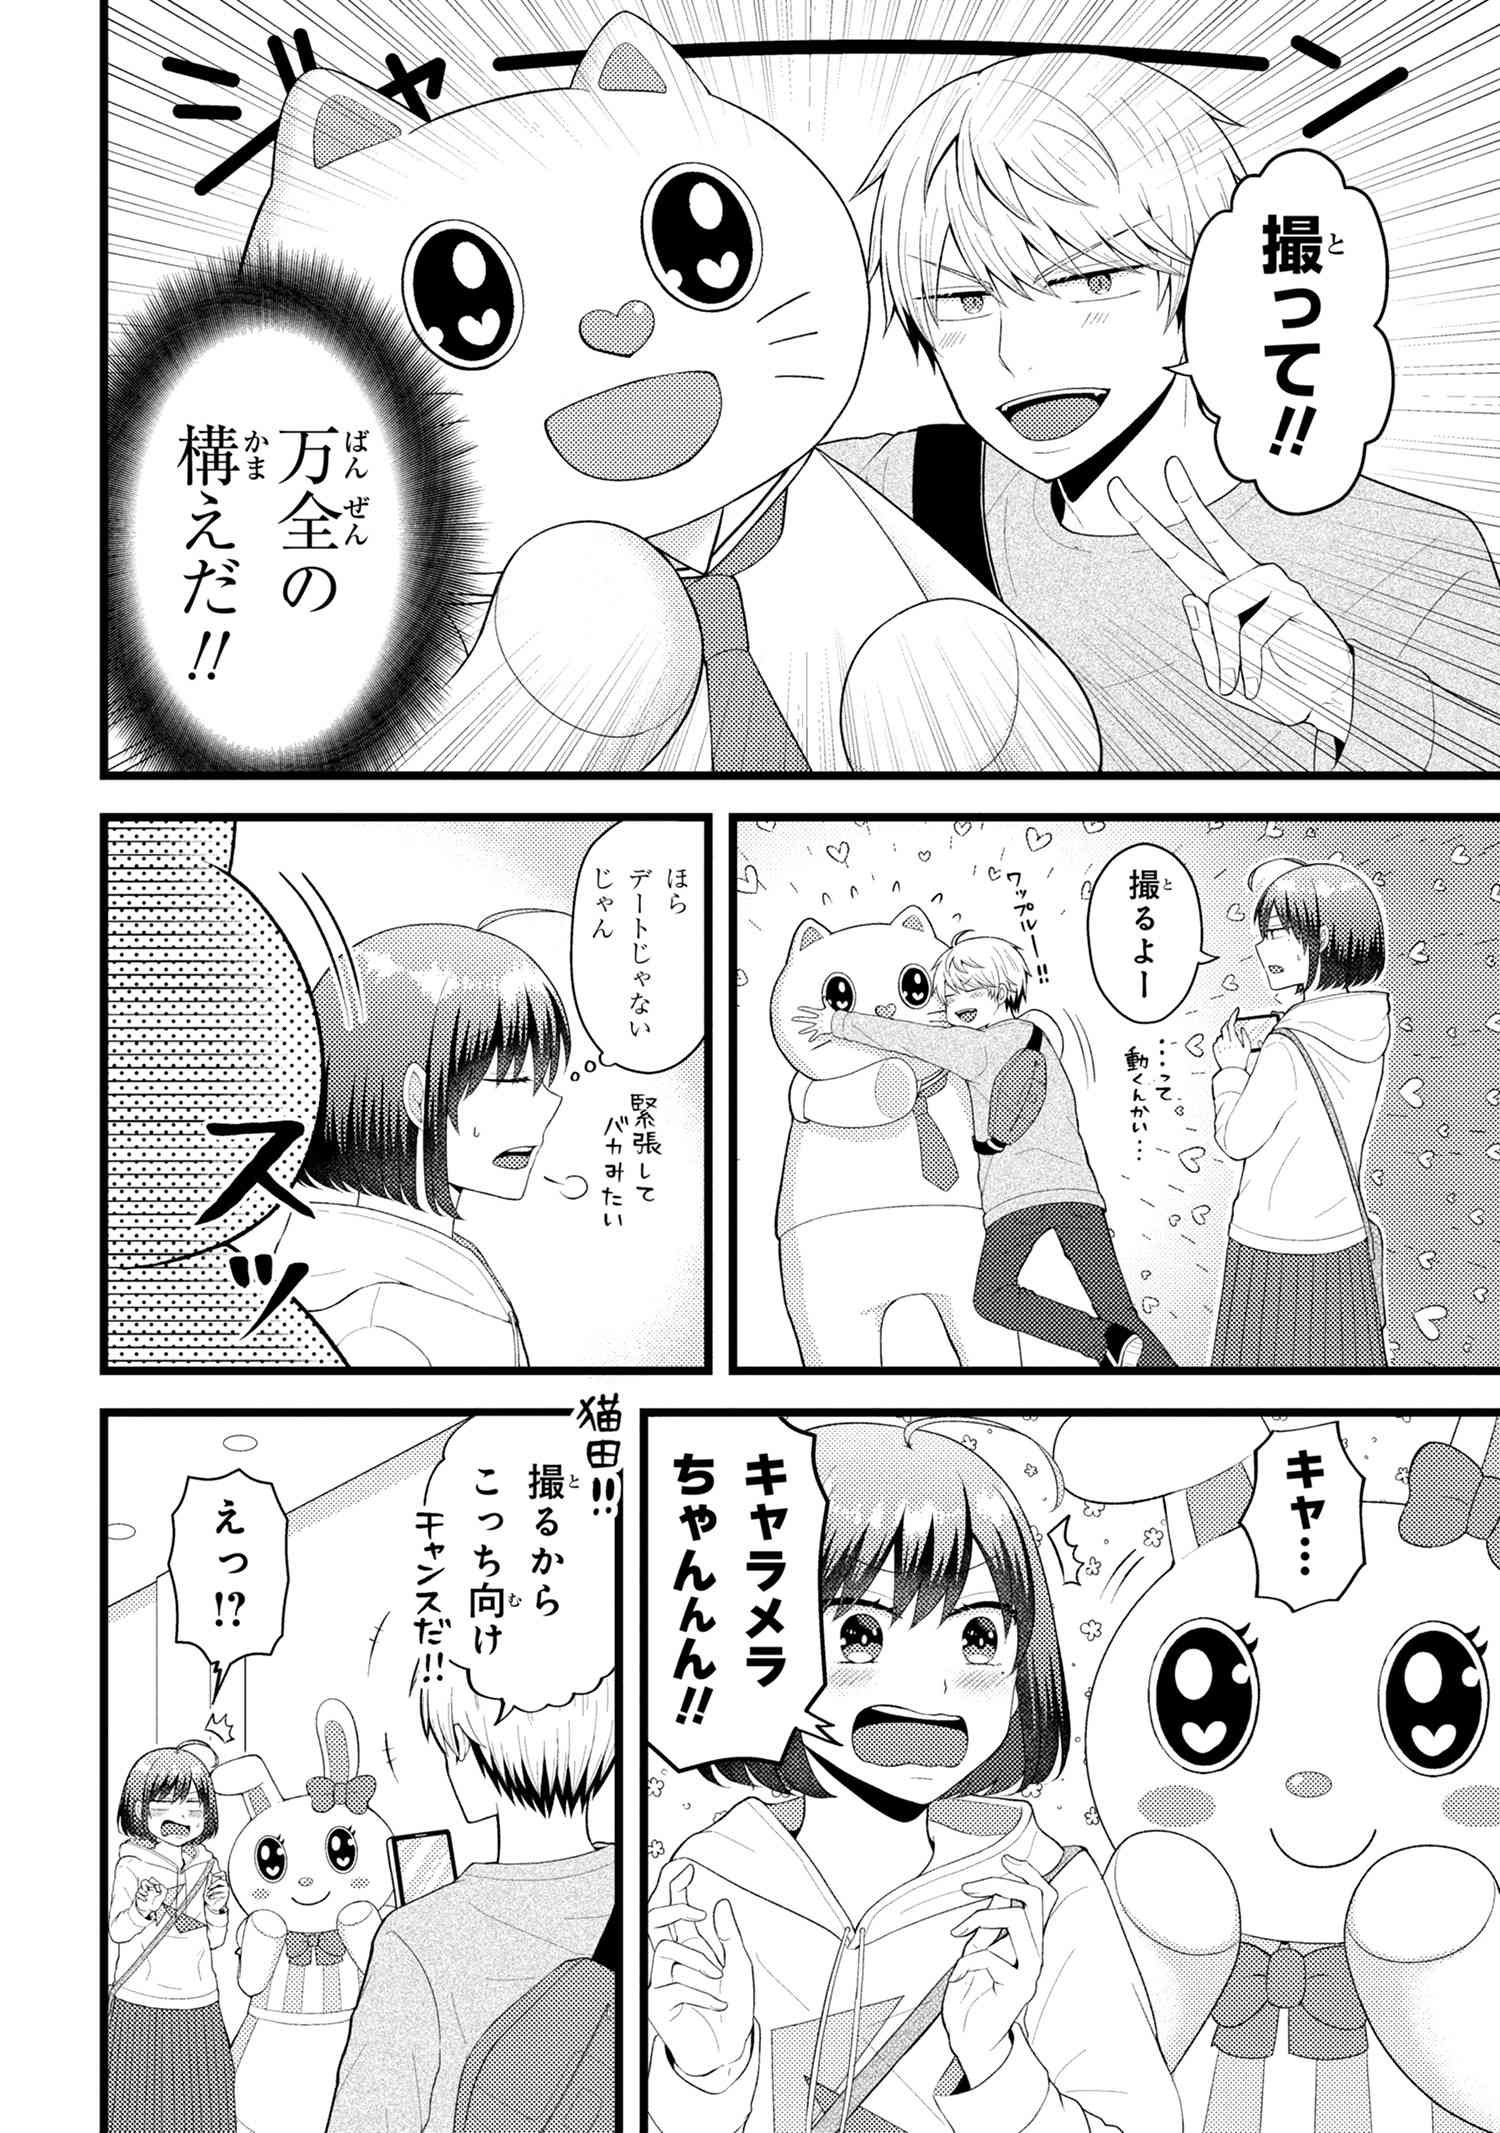 Tomodachi Inai Nekota-san to Sweets Tabetai Gokutani-kun - Chapter 8-3 - Page 2